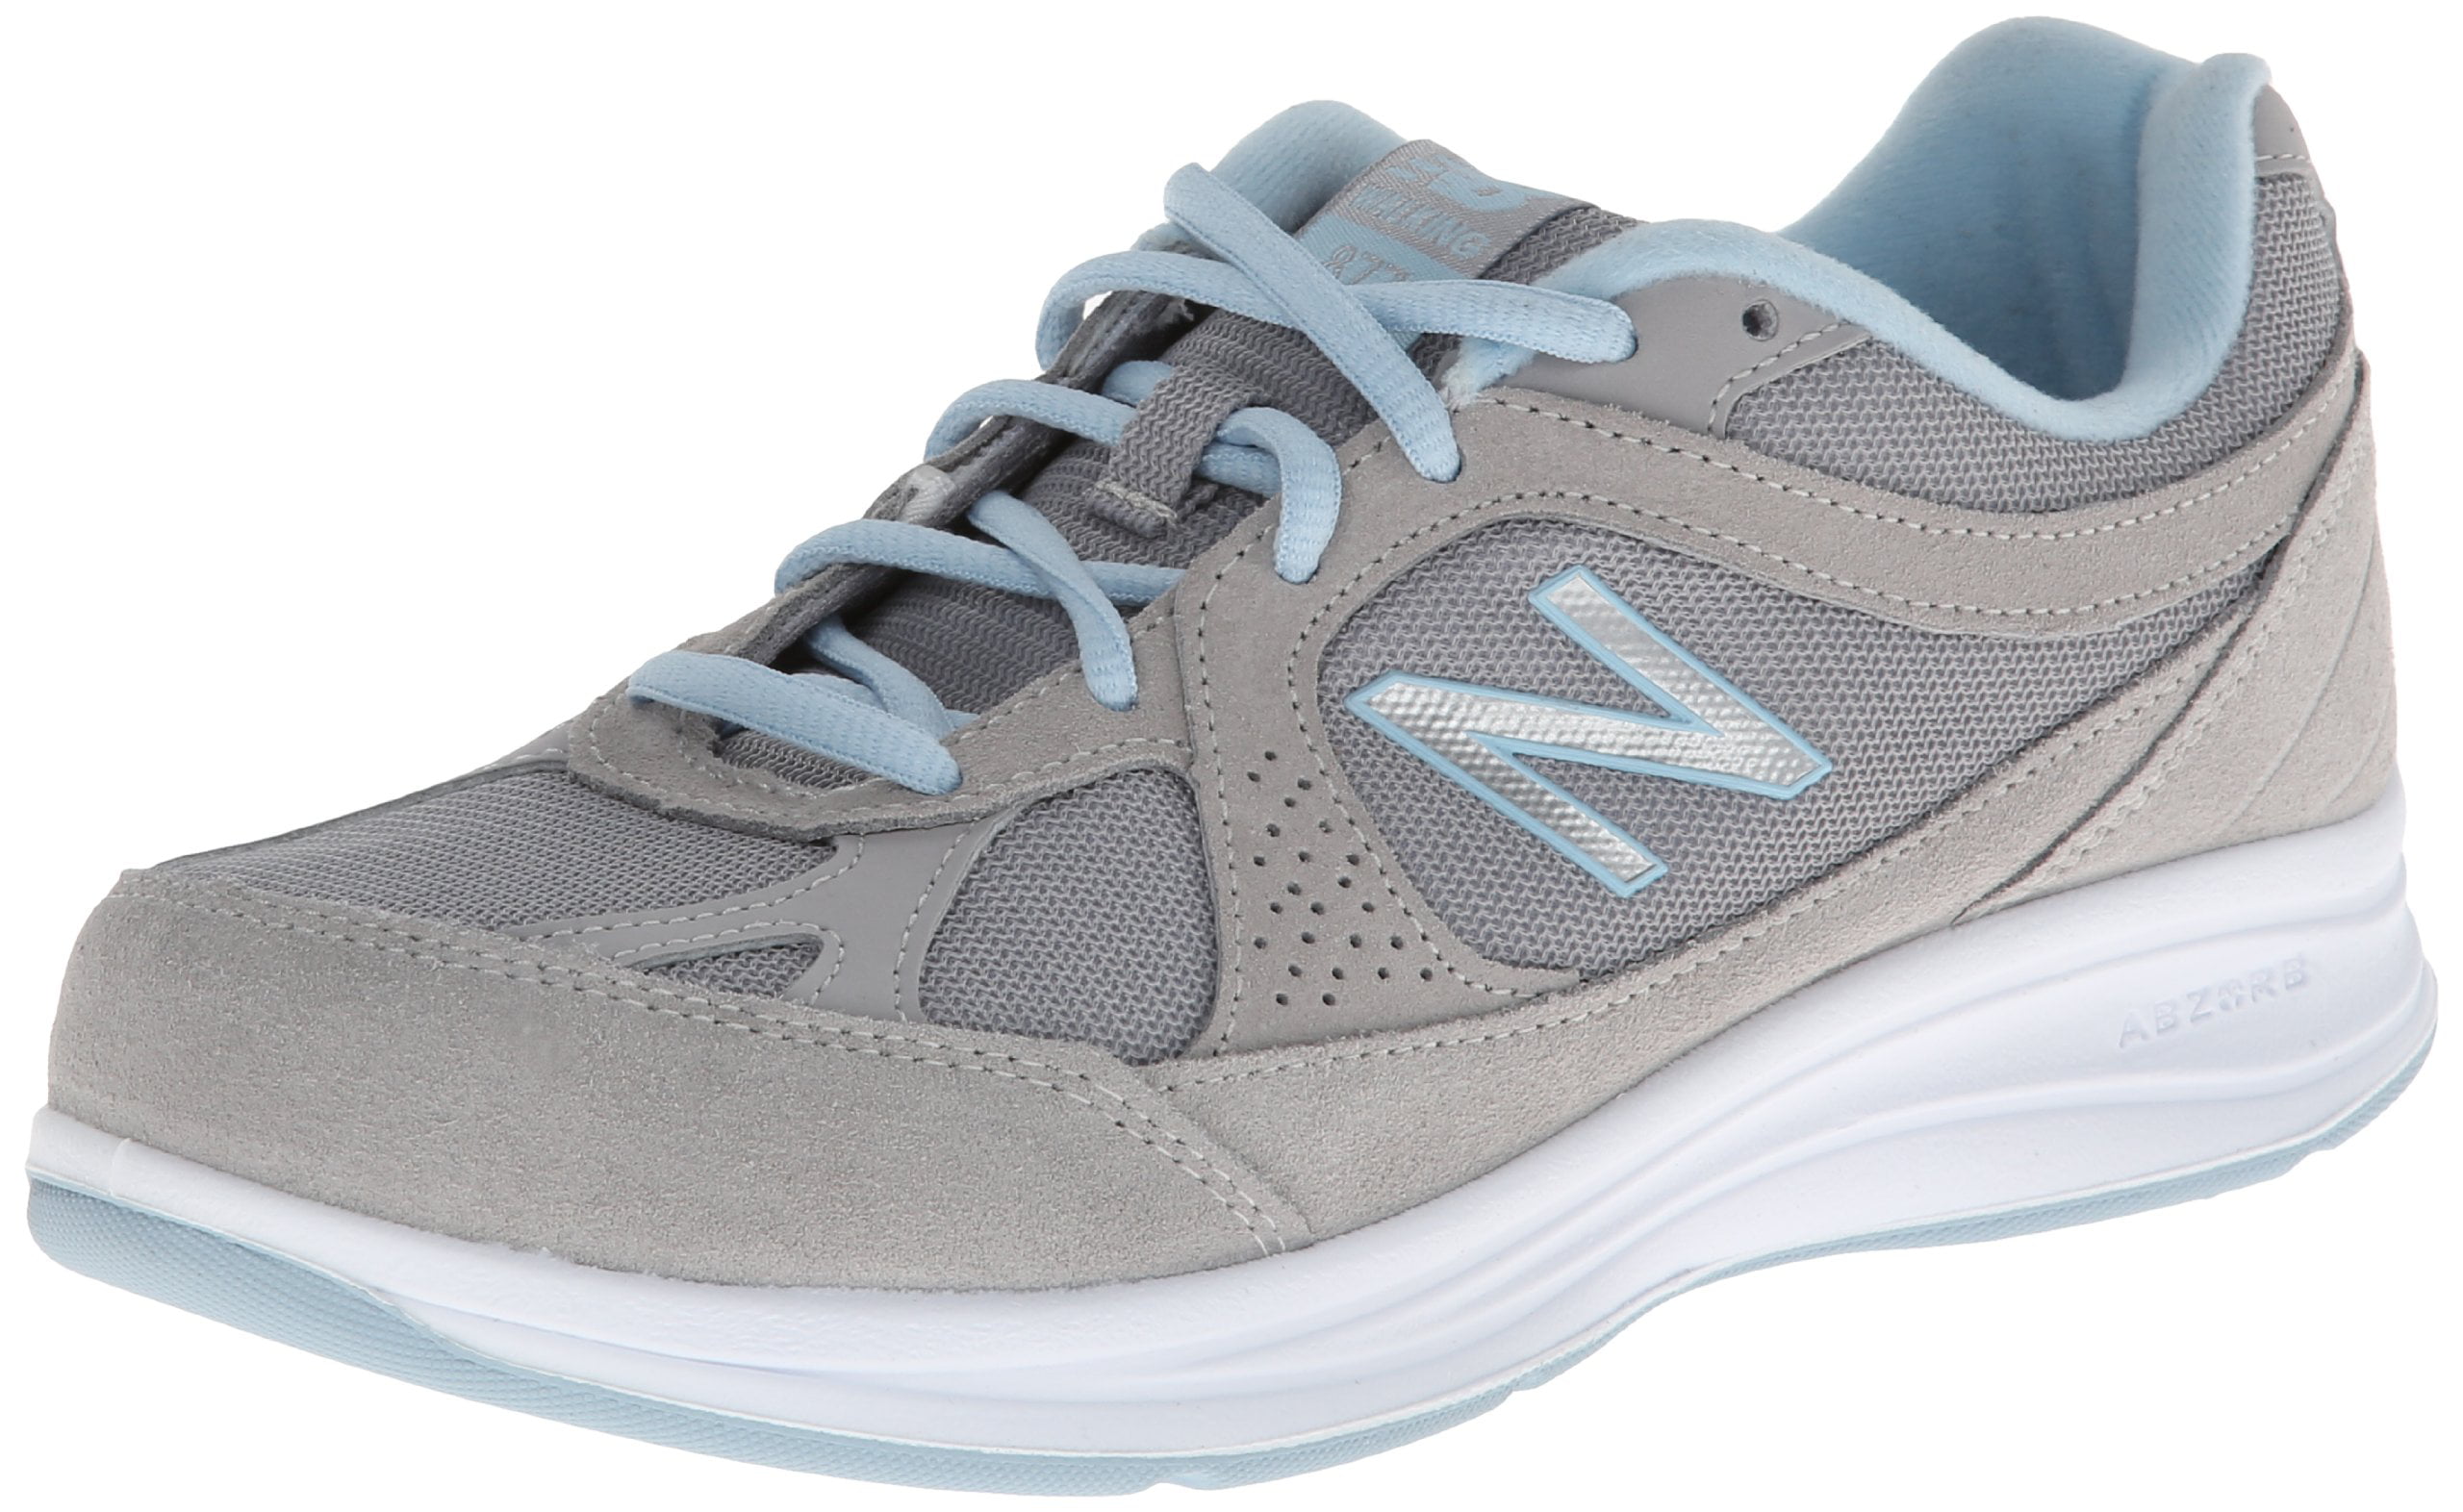 New Balance - New Balance Women's WW877 Walking Shoe, Silver/Blue, 6.5 ...